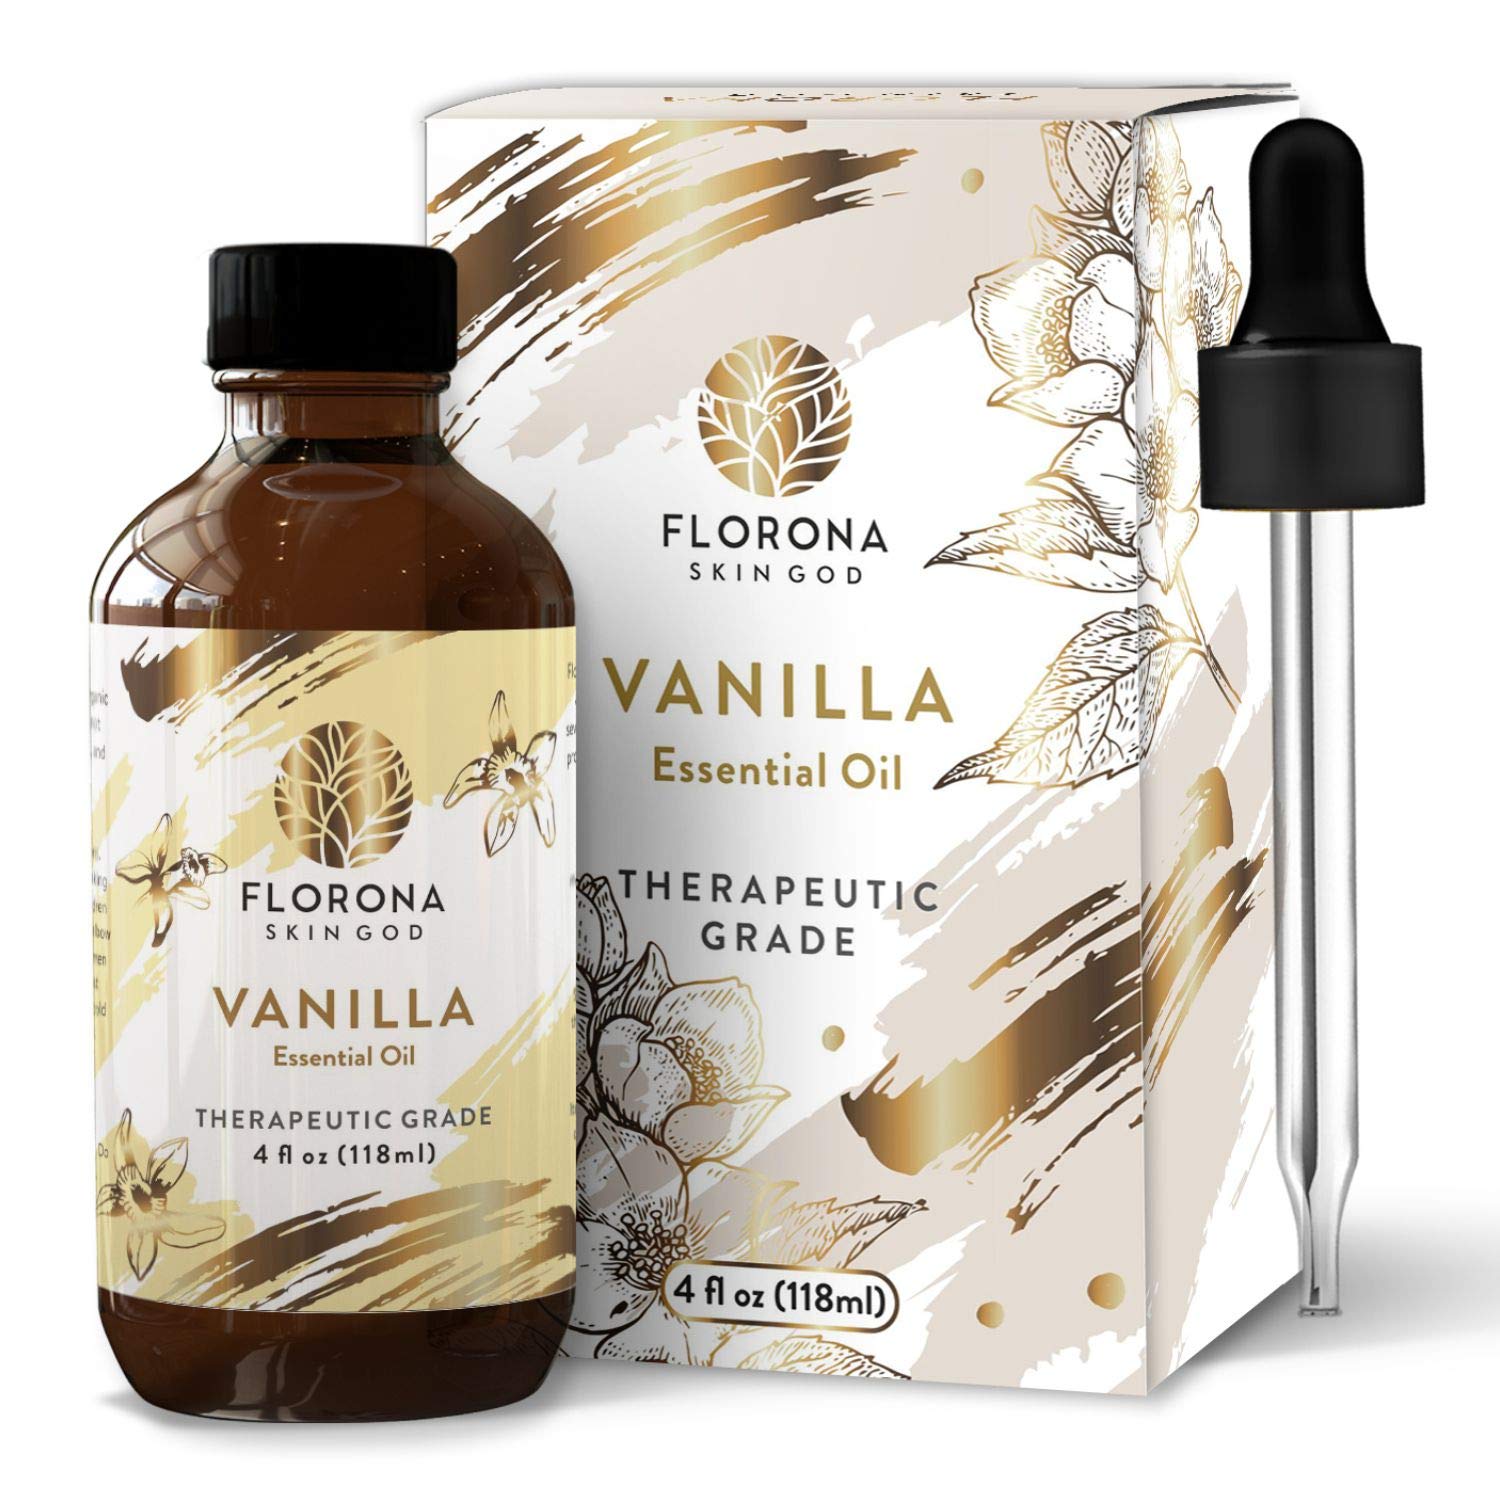 Florona Vanilla Premium Grade Essential Oil - 4 fl oz, for Hair, Skin,  Diffuser Aromatherapy, Soap Making, Candle Making 